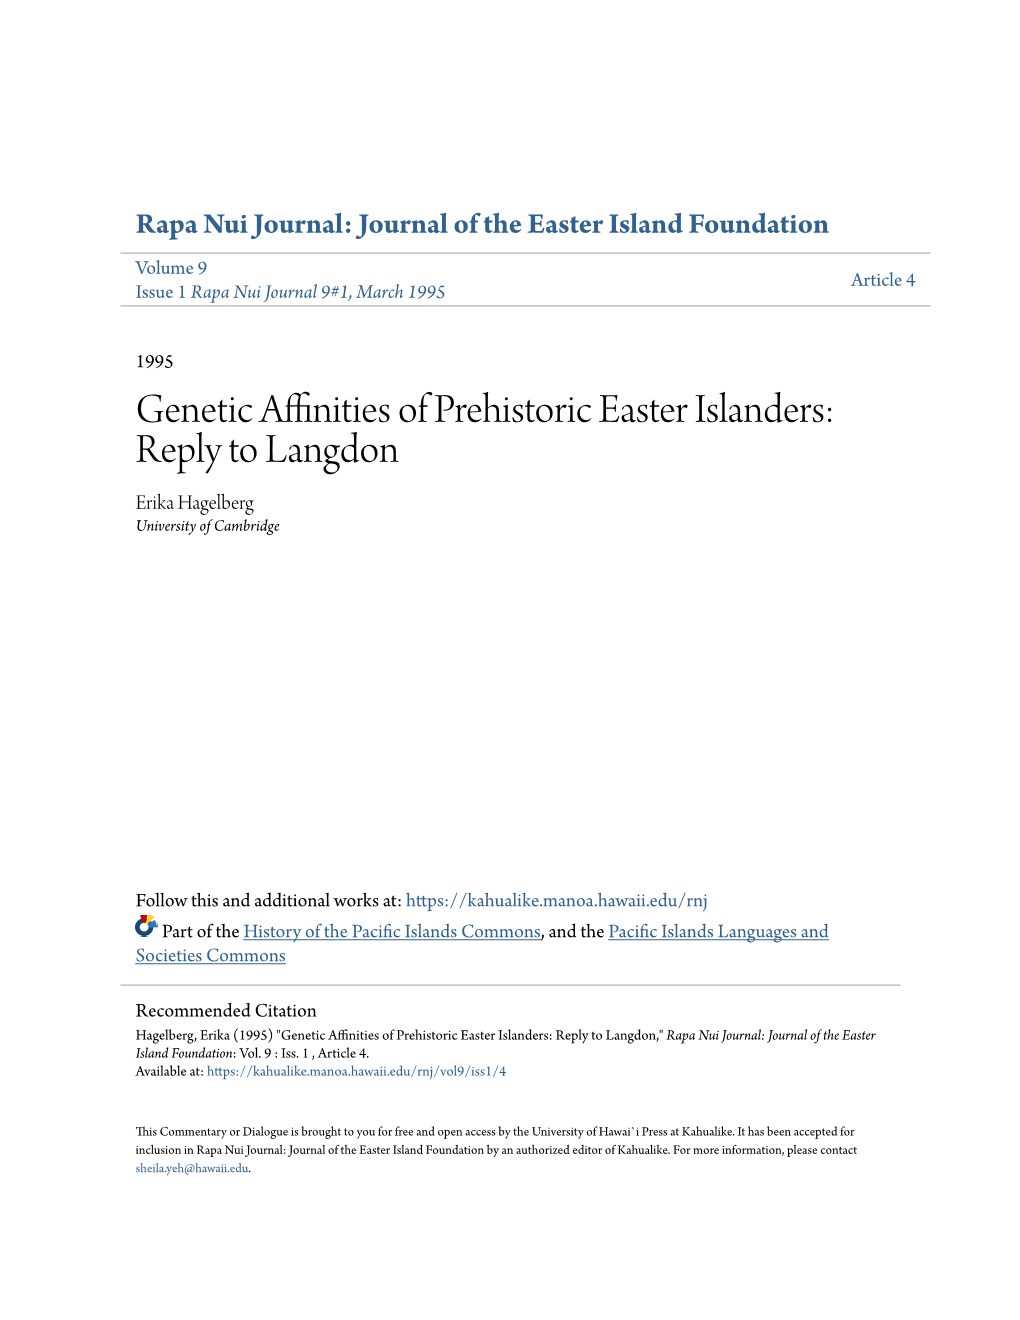 Genetic Affinities of Prehistoric Easter Islanders: Reply to Langdon Erika Hagelberg University of Cambridge